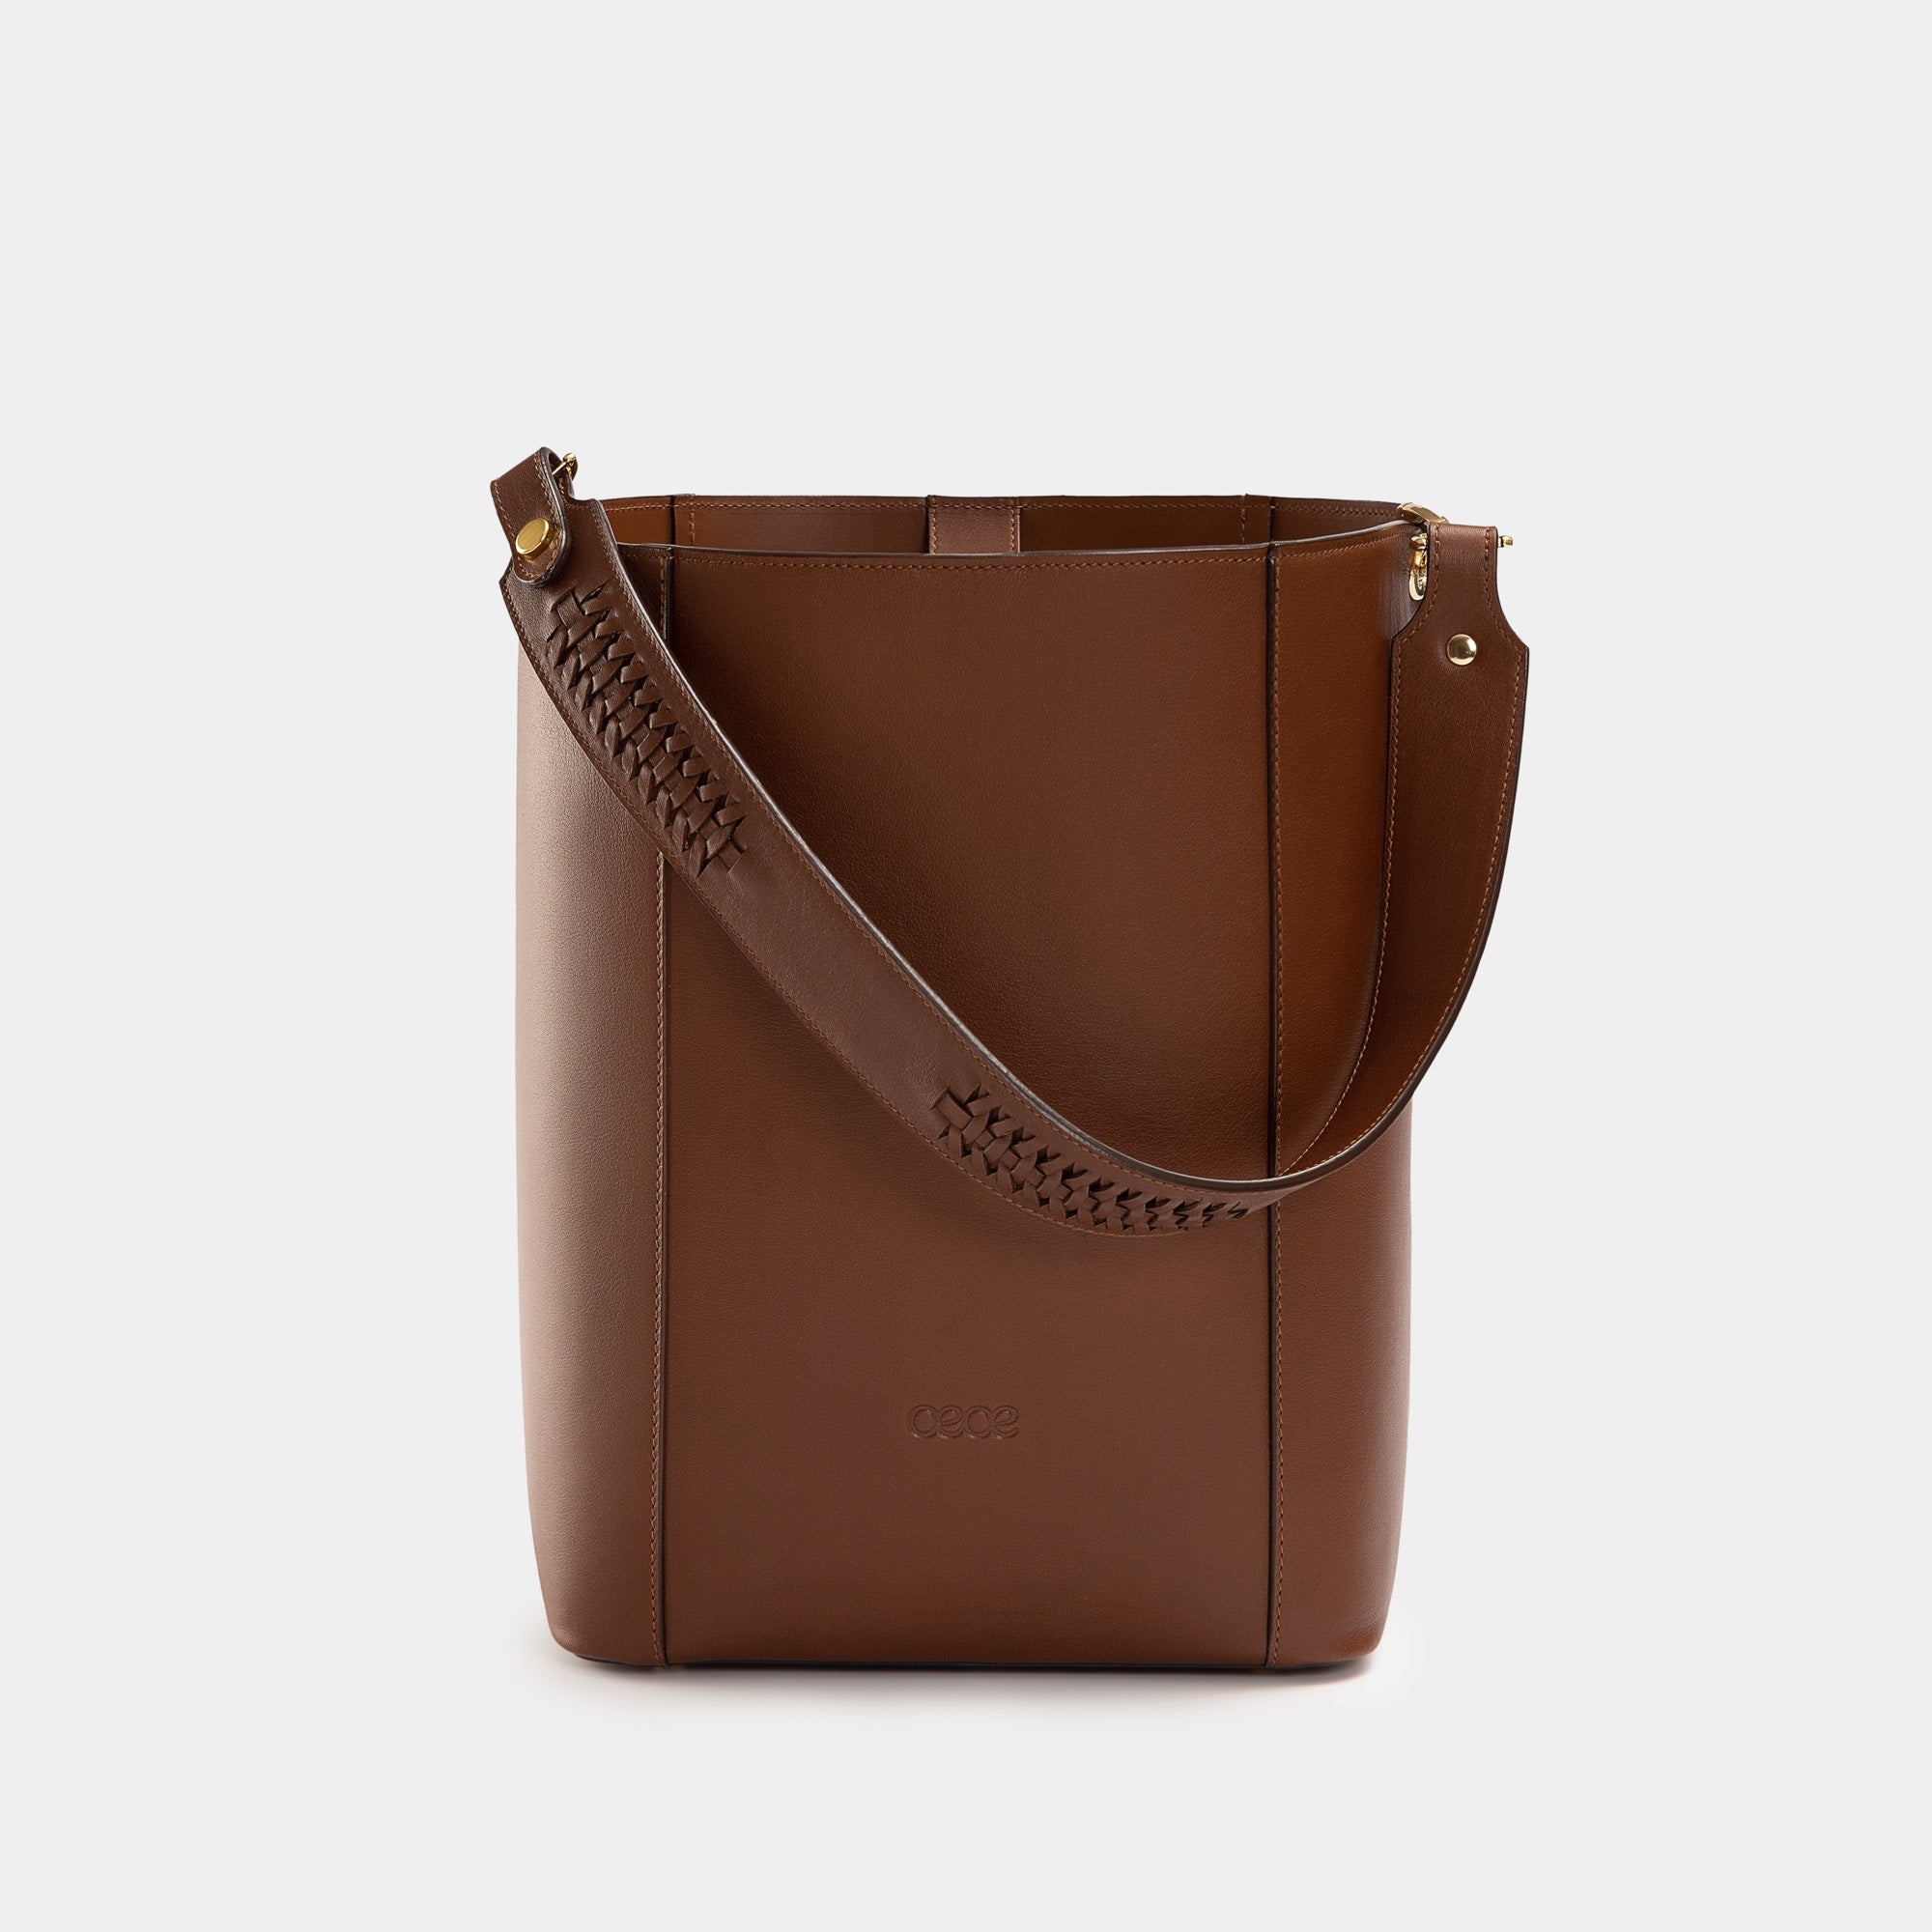 perspectiva Accidentalmente Caprichoso Bolso shopper de piel marrón - OEOE Handbags